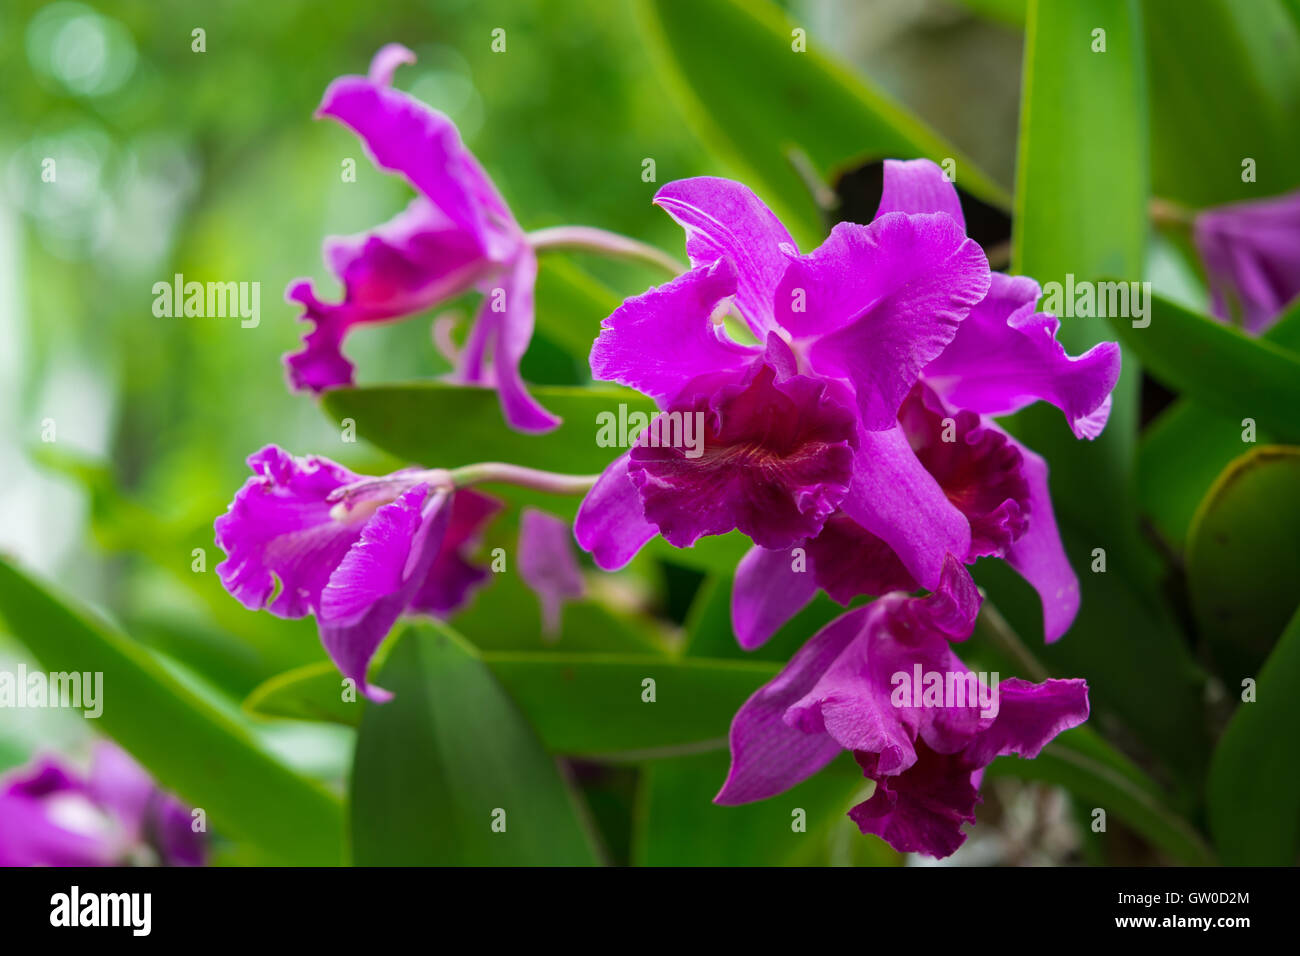 Cattleya orchid purple. The beautiful backdrop of a soft blur. Stock Photo